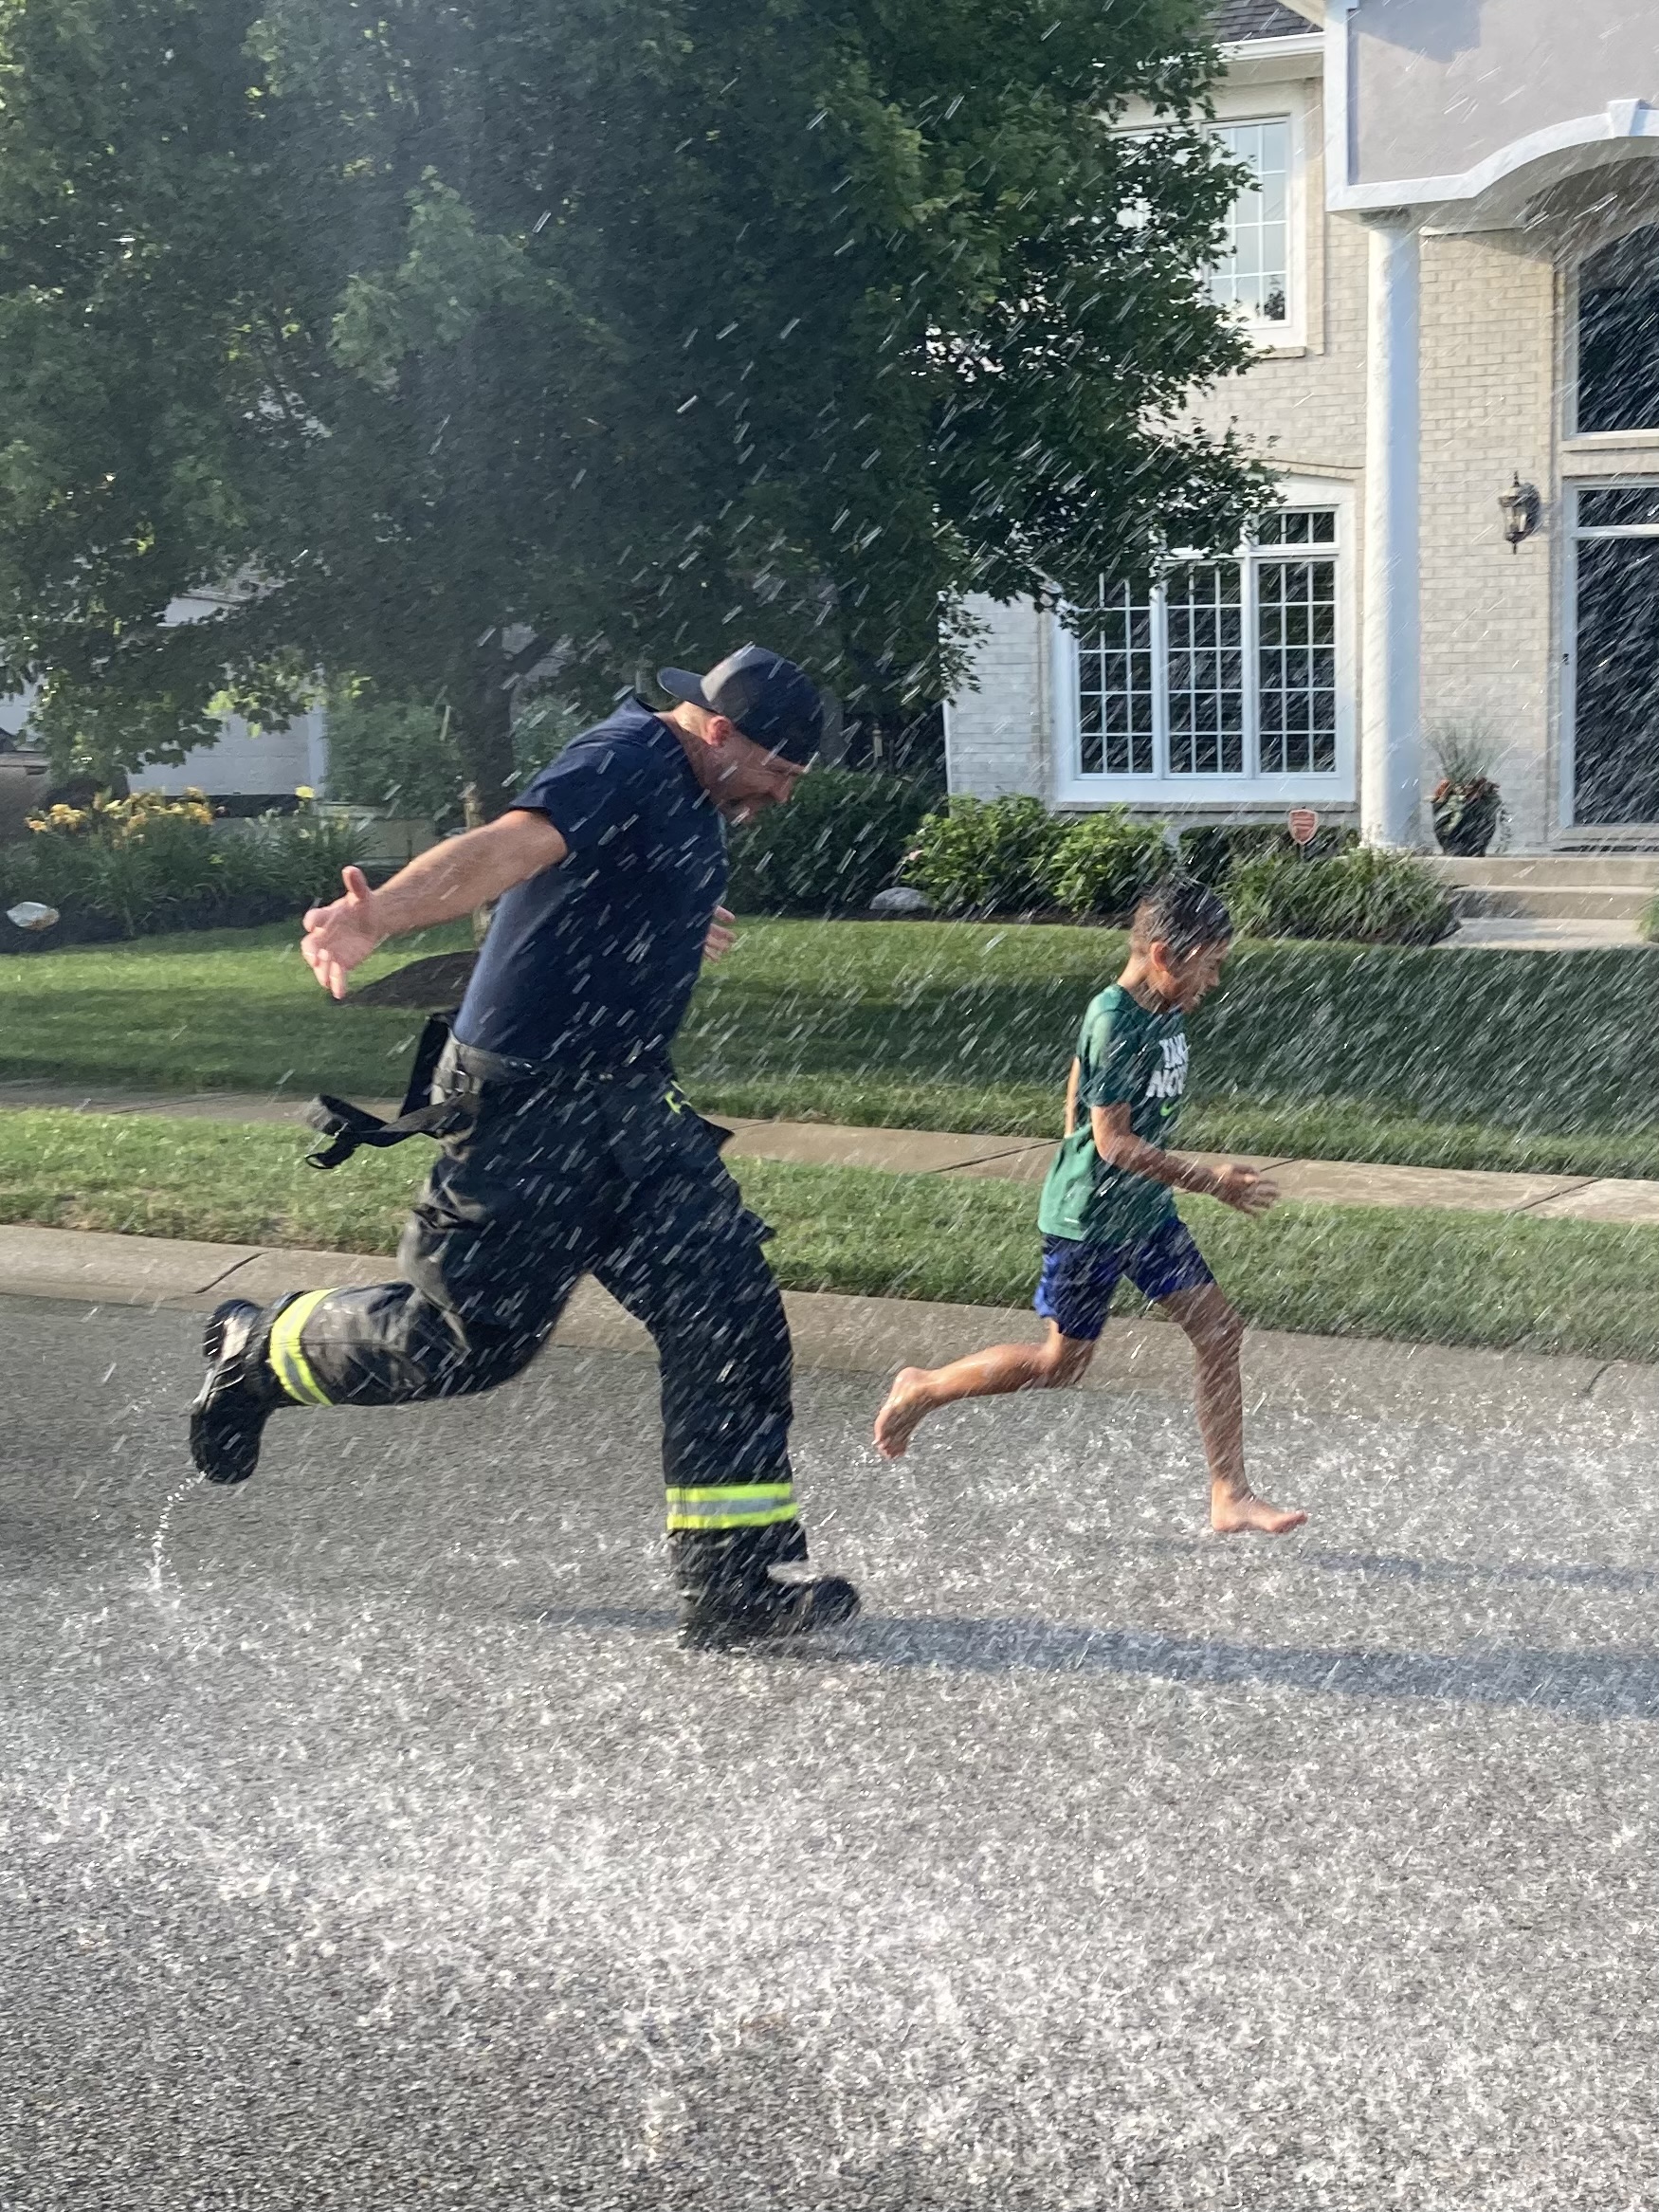 fireman and child running through sprayed water